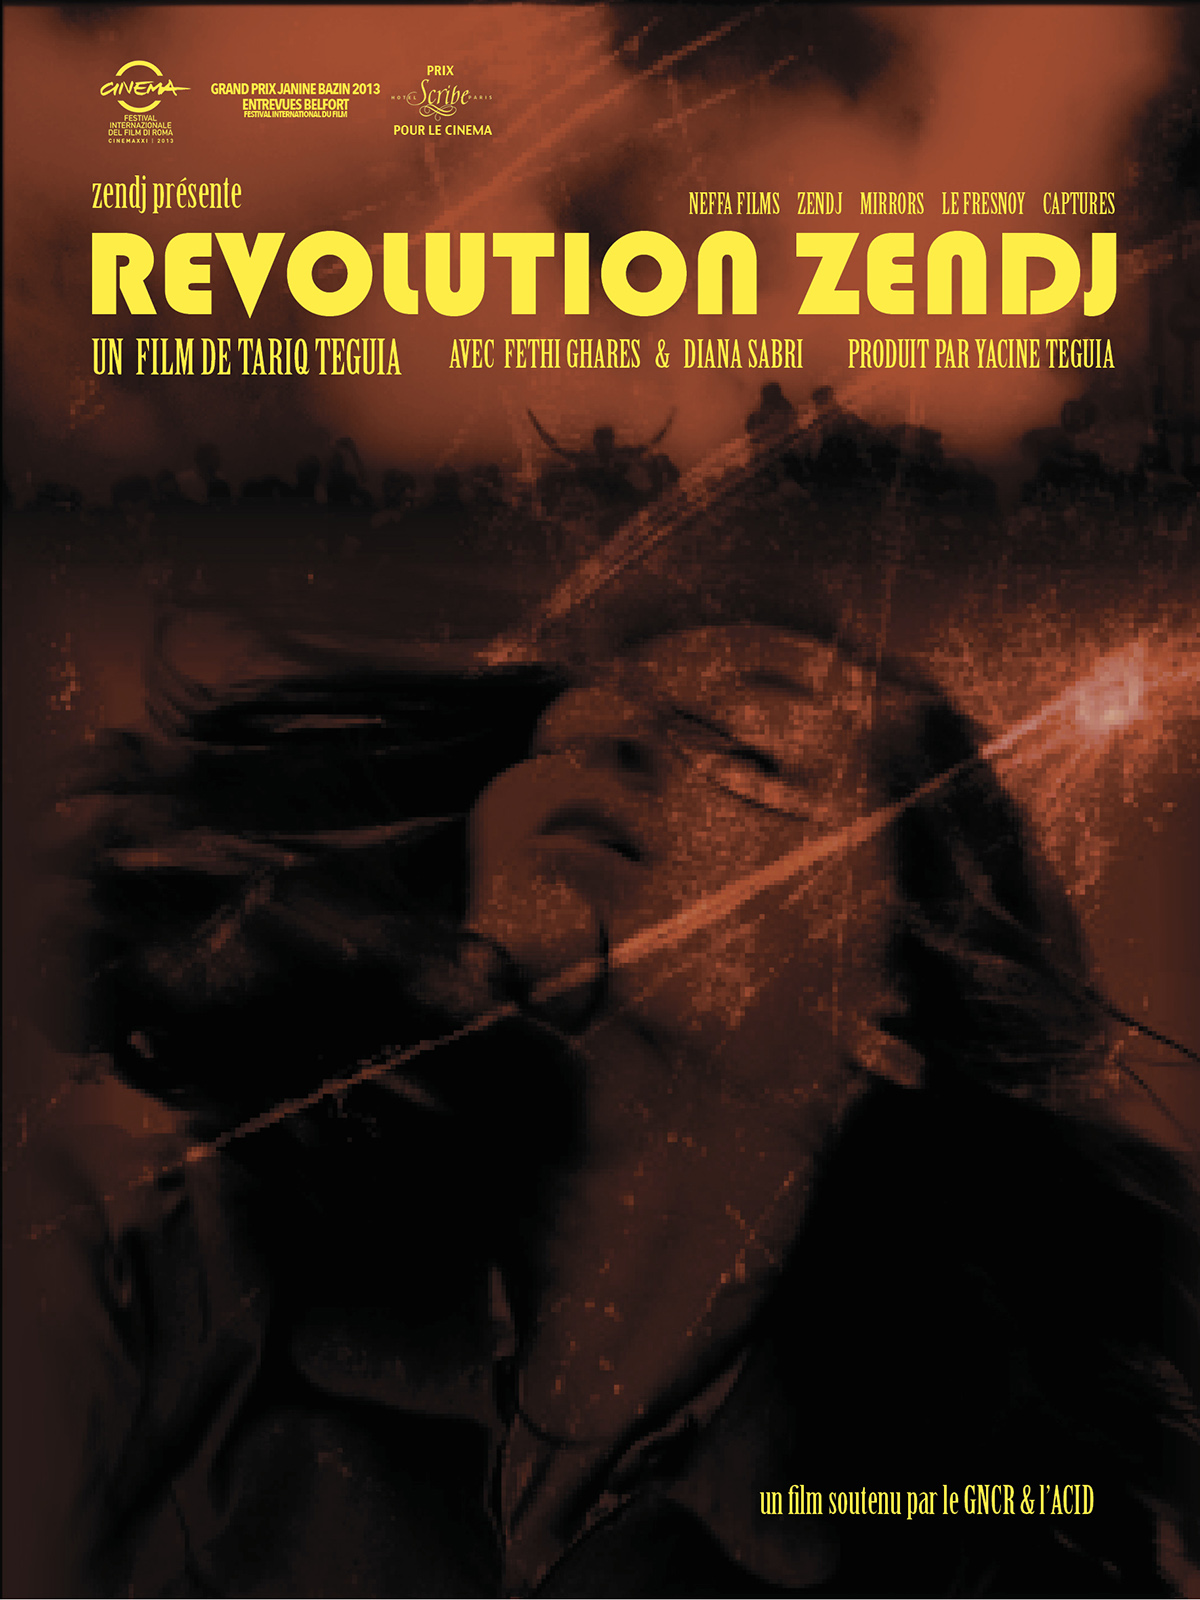 Rvolution Zendj